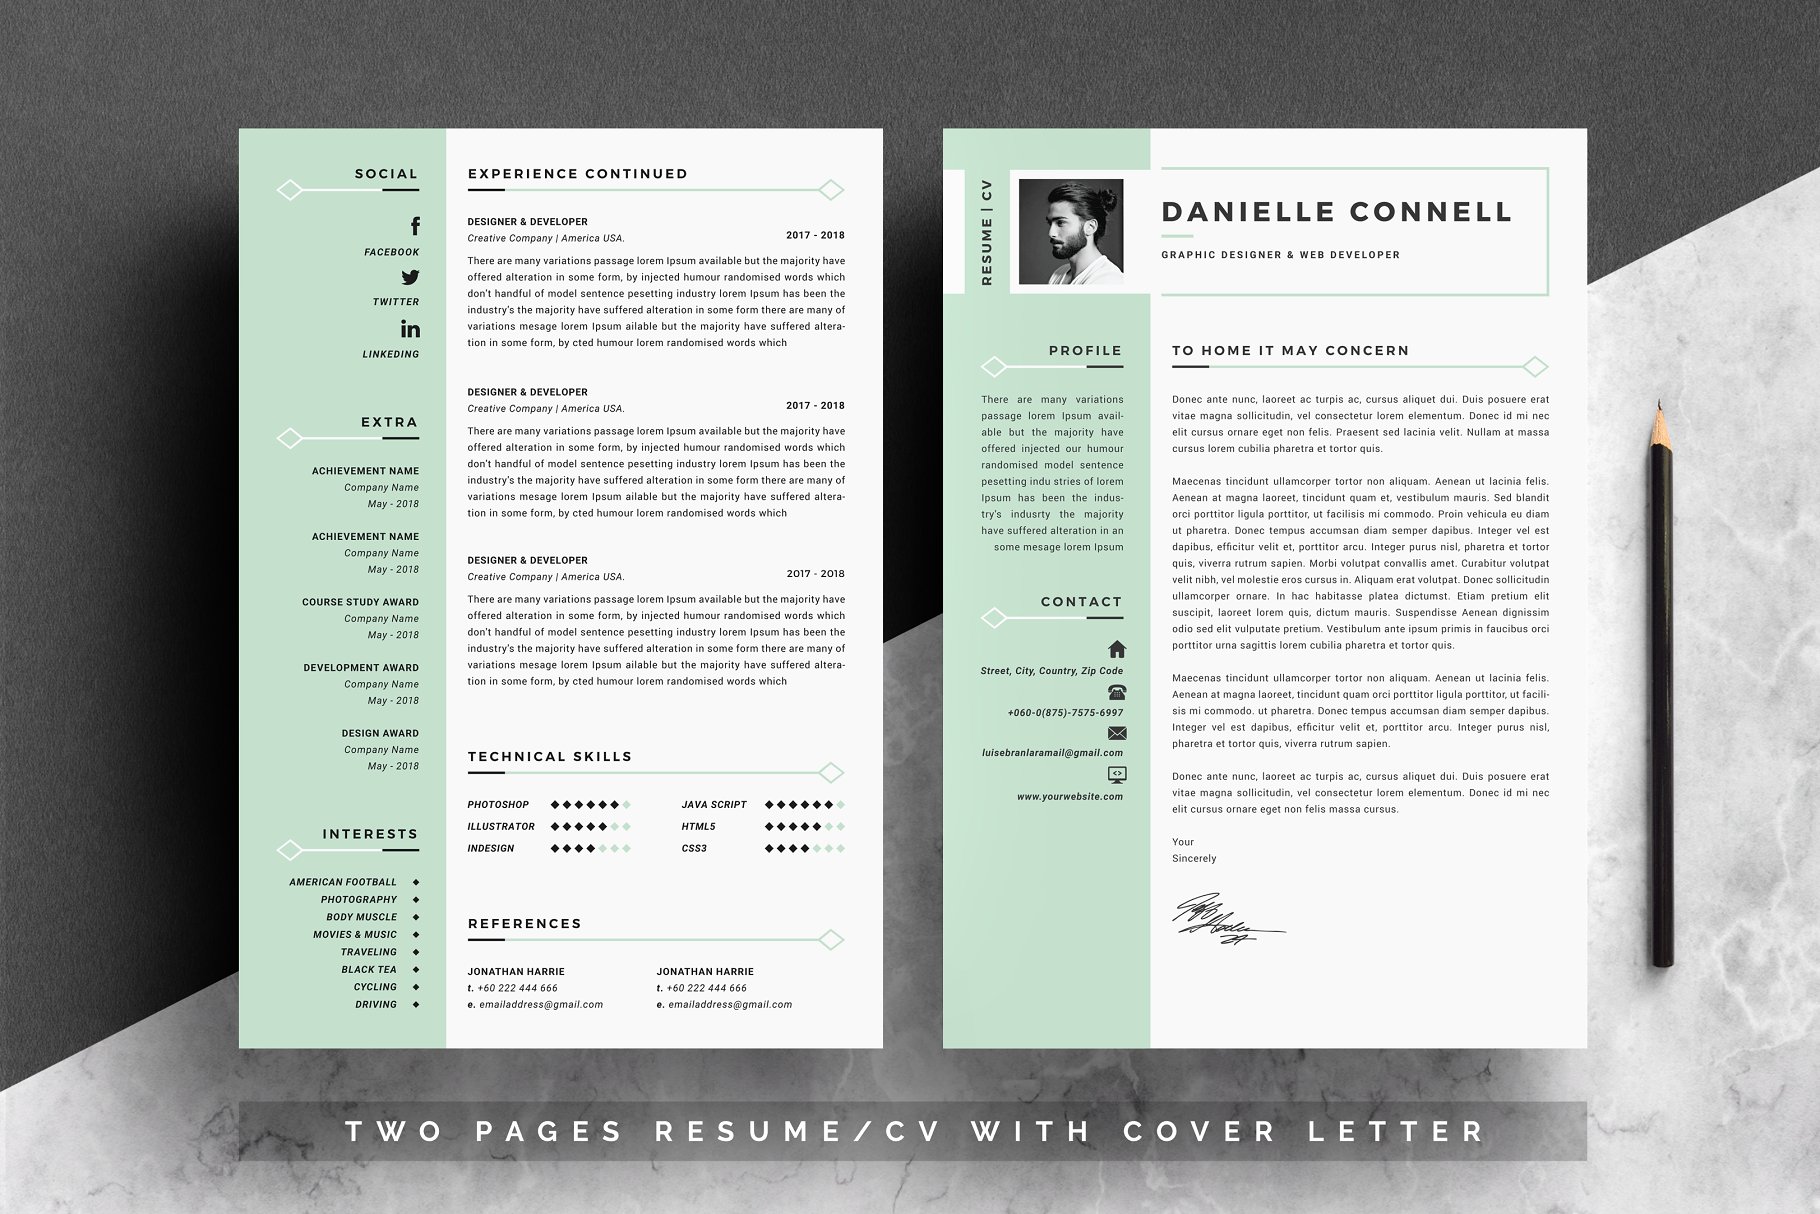 精致优雅的Word简历模板及求职信模板  Word Resume Template & Cover Letter插图(3)